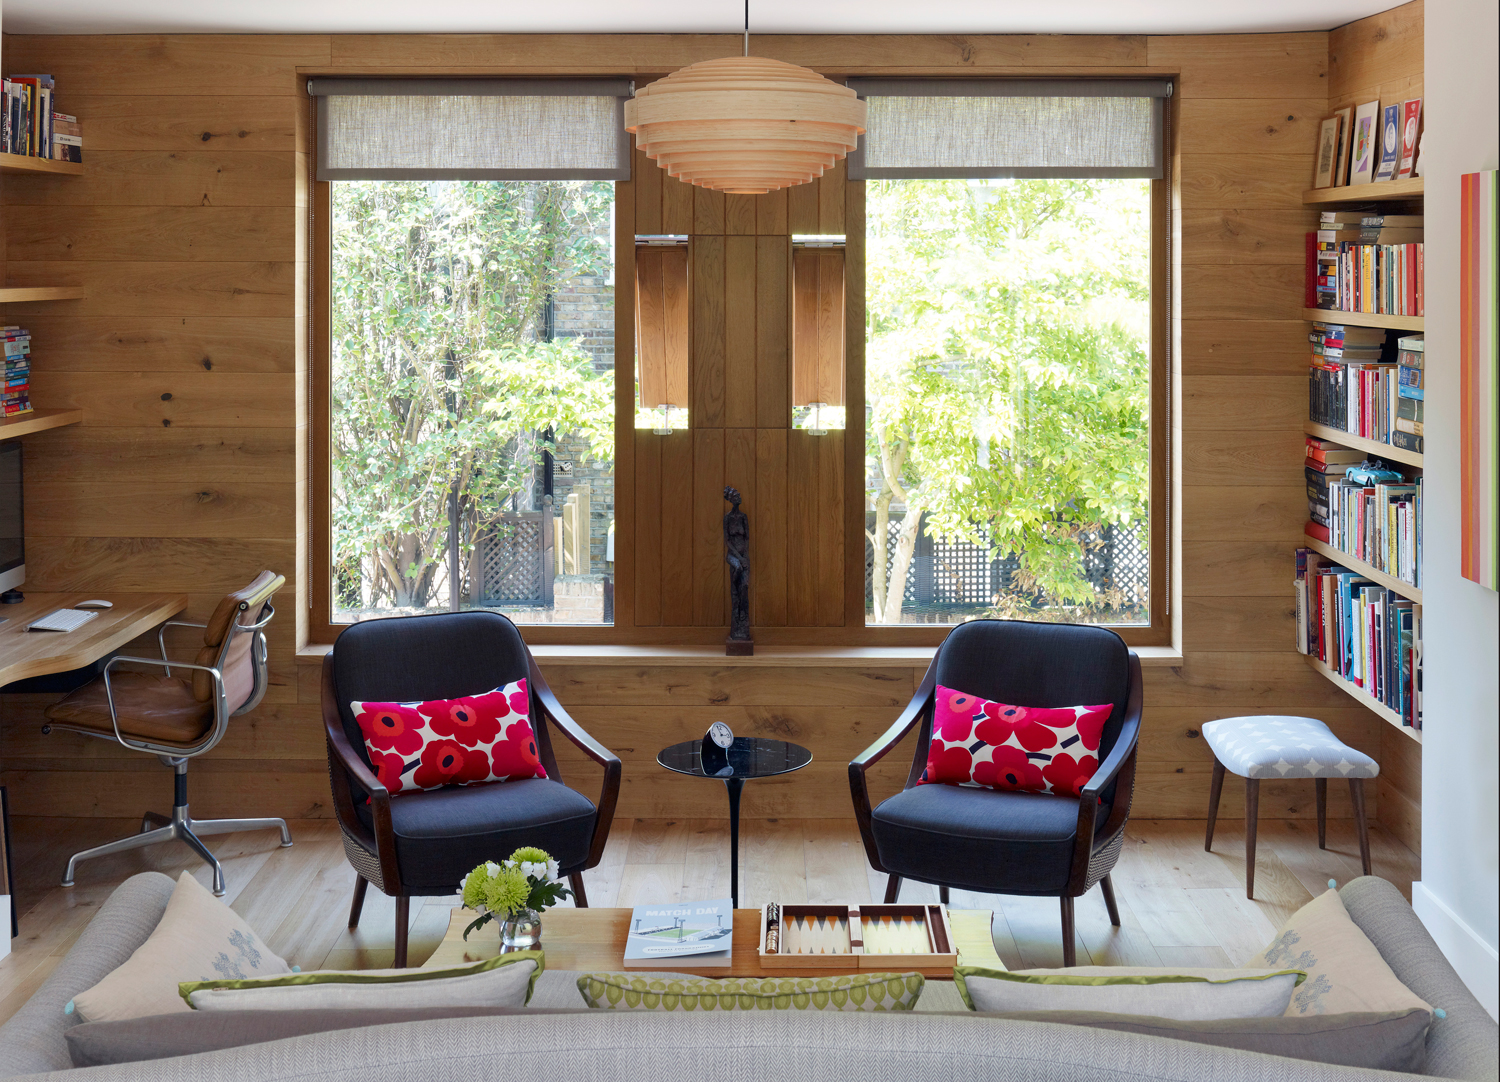 Jill Scholes Interior design, mews house sitting room view towards windows